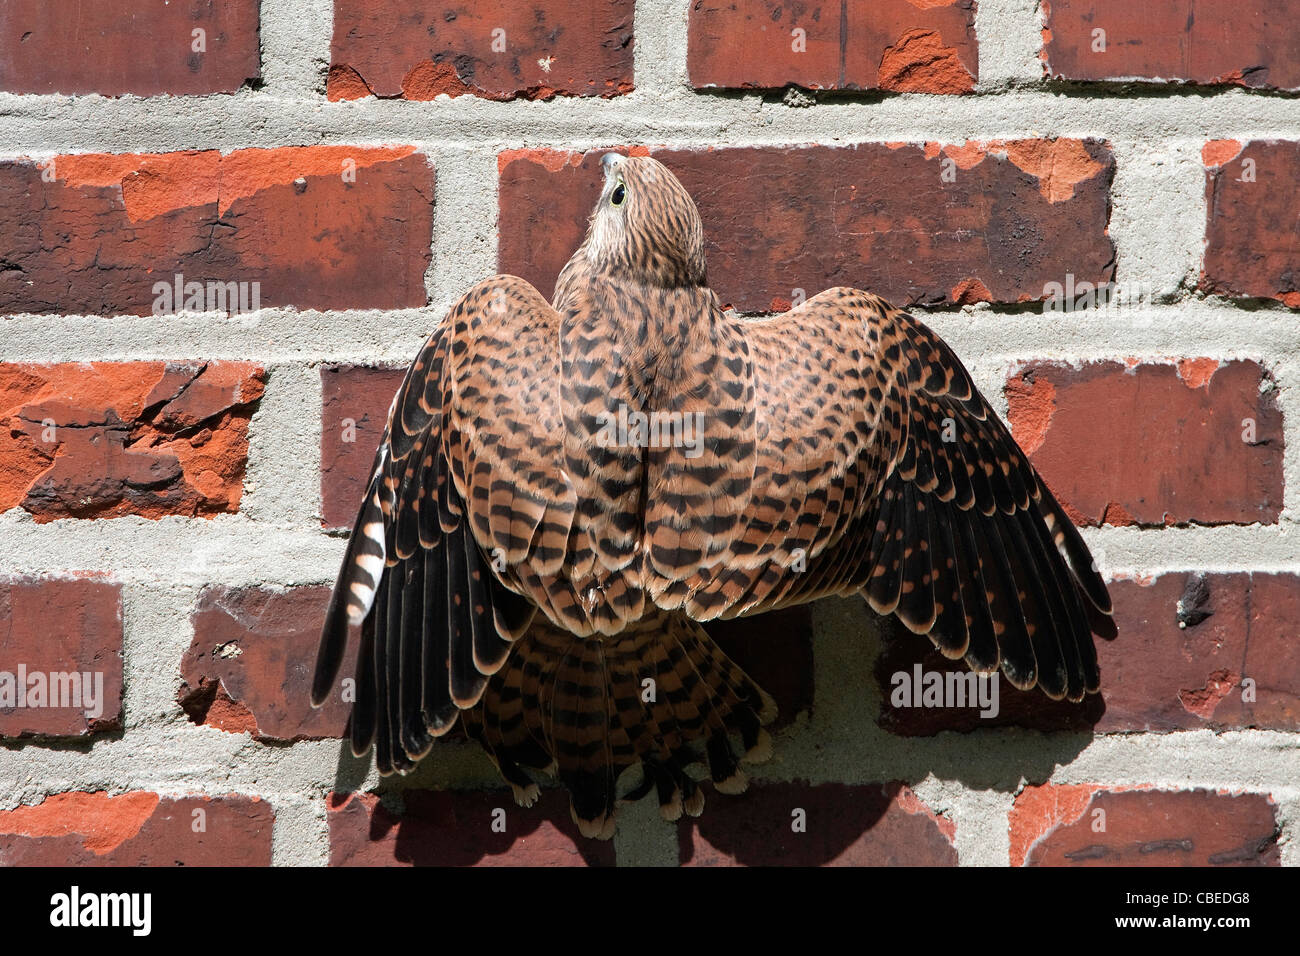 Common Kestrel (Falco tinnunculus). Juvenile clinging to a brick wall. Stock Photo